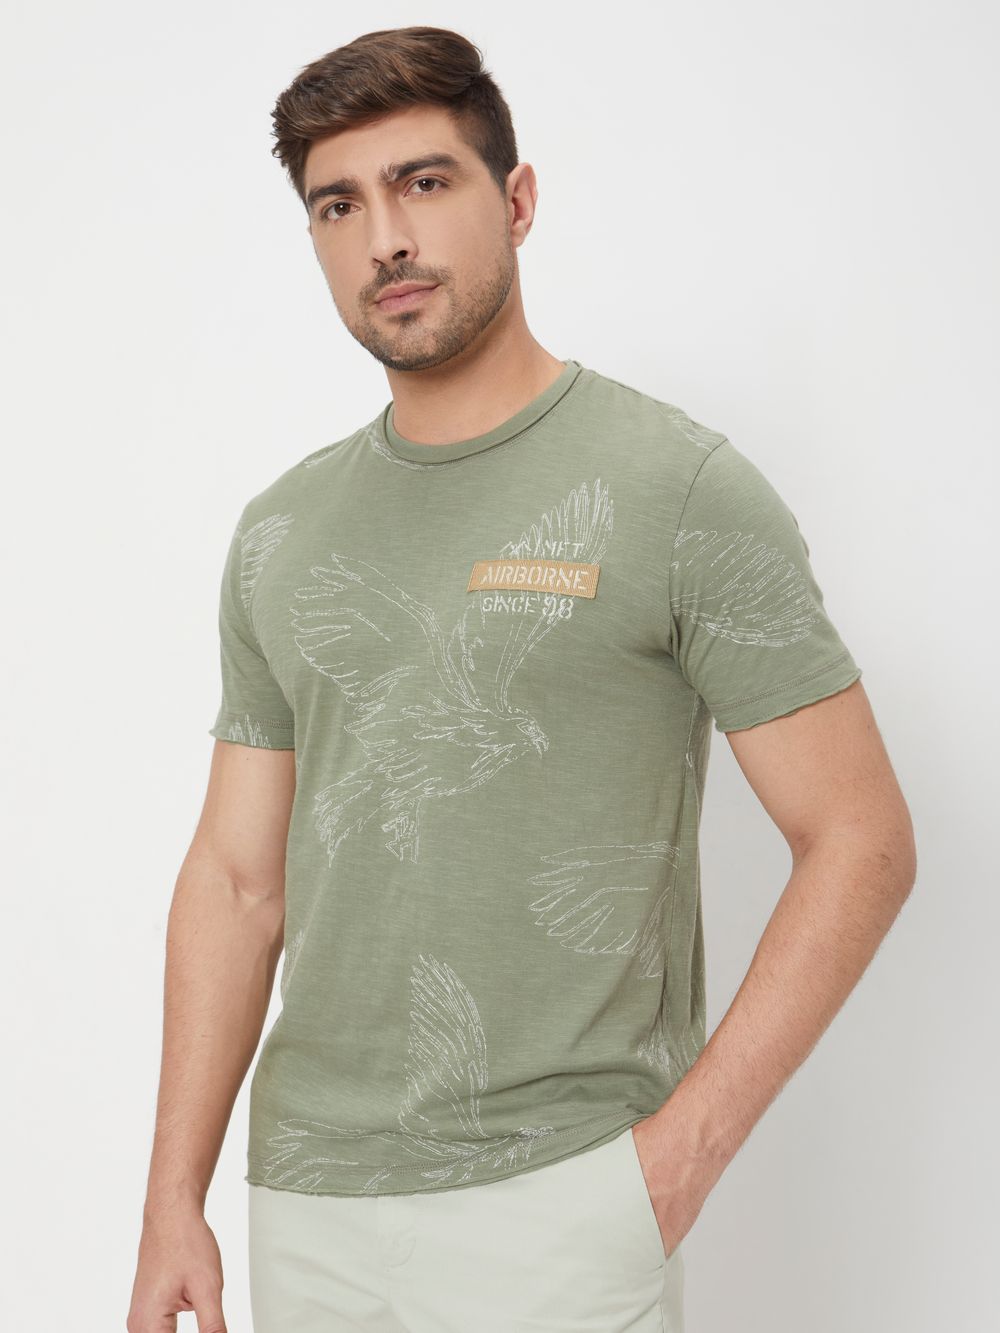 Light Olive Embroidered Print Slim Fit Slub Jersey T-Shirt